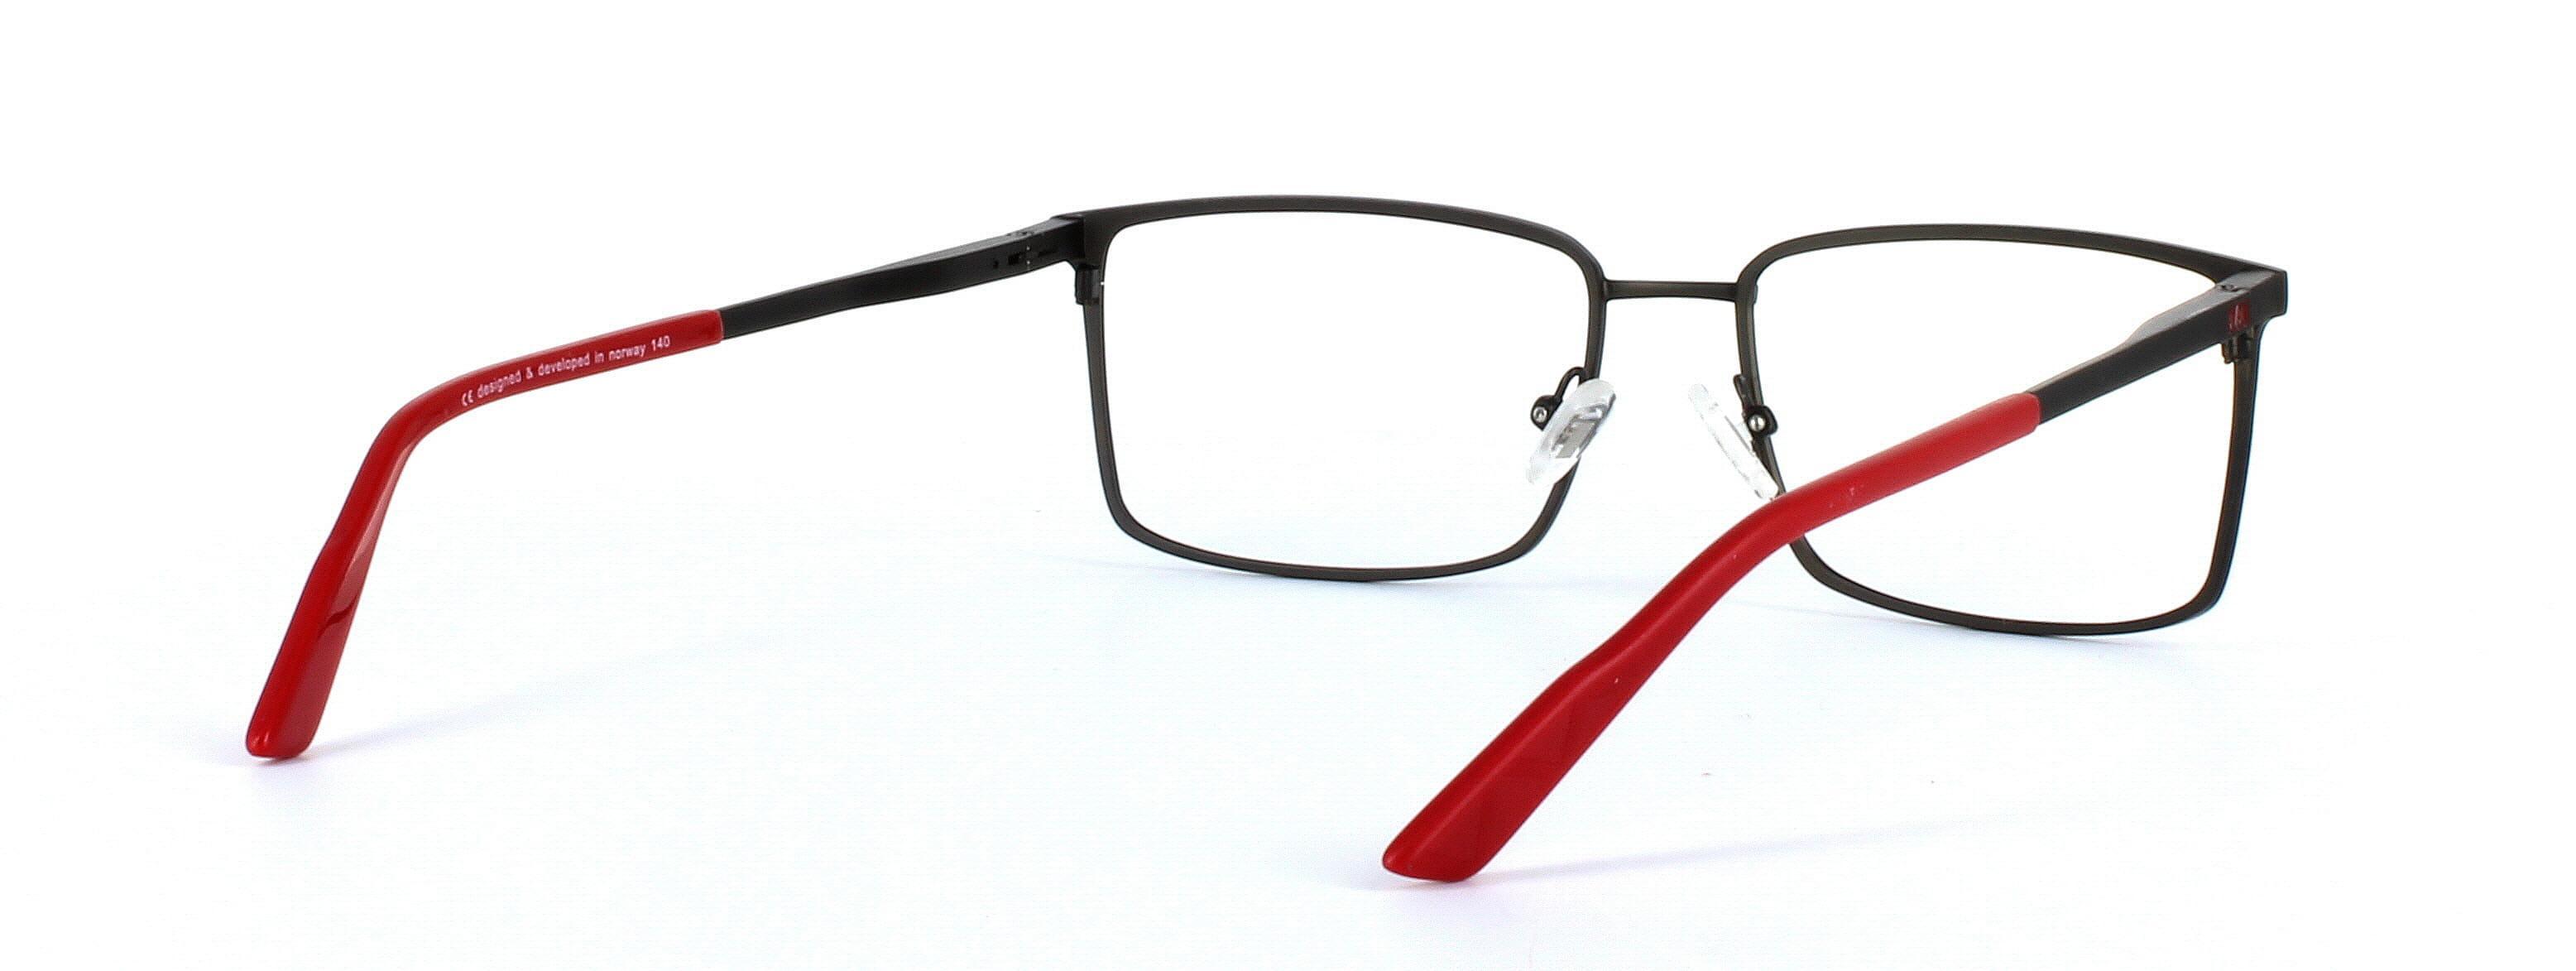 Helly Hansen HH 1028 Black Full Rim Rectangular Metal Glasses - Image View 4